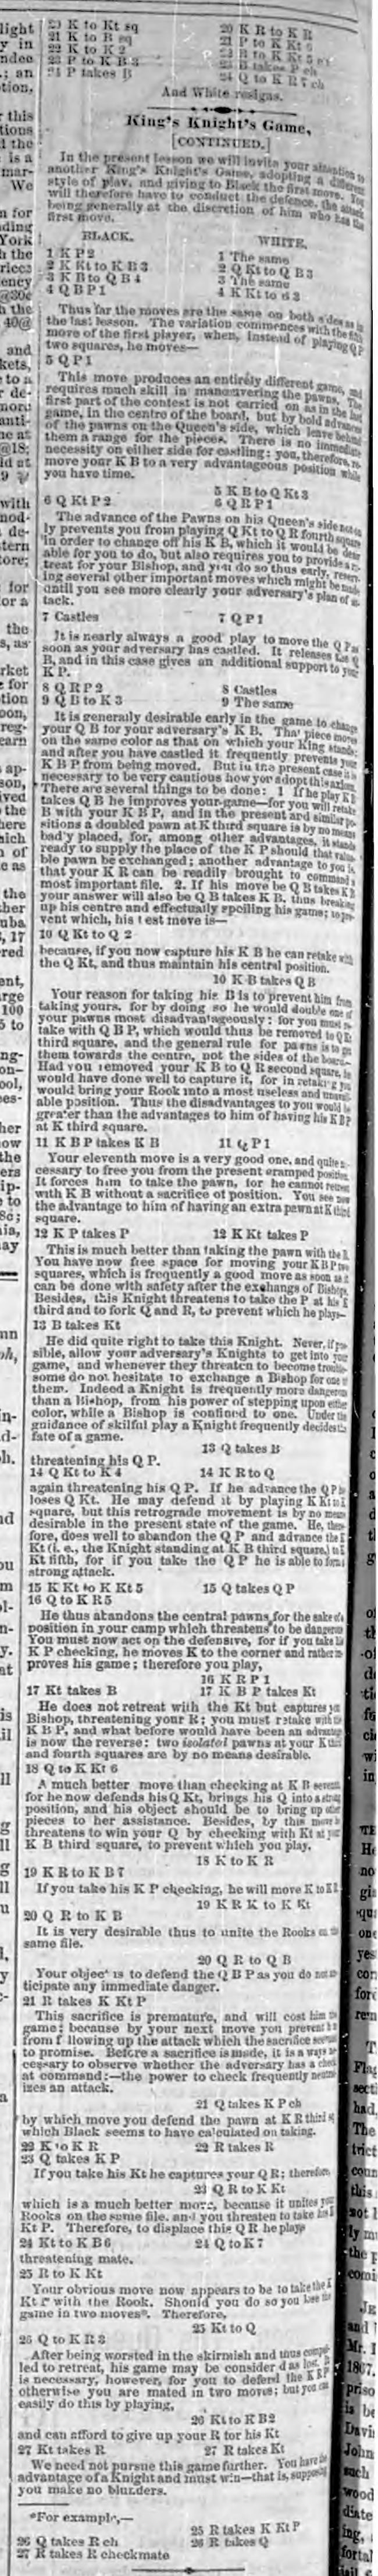 1866.10.22-02 Macon Georgia Weekly Telegraph.jpg